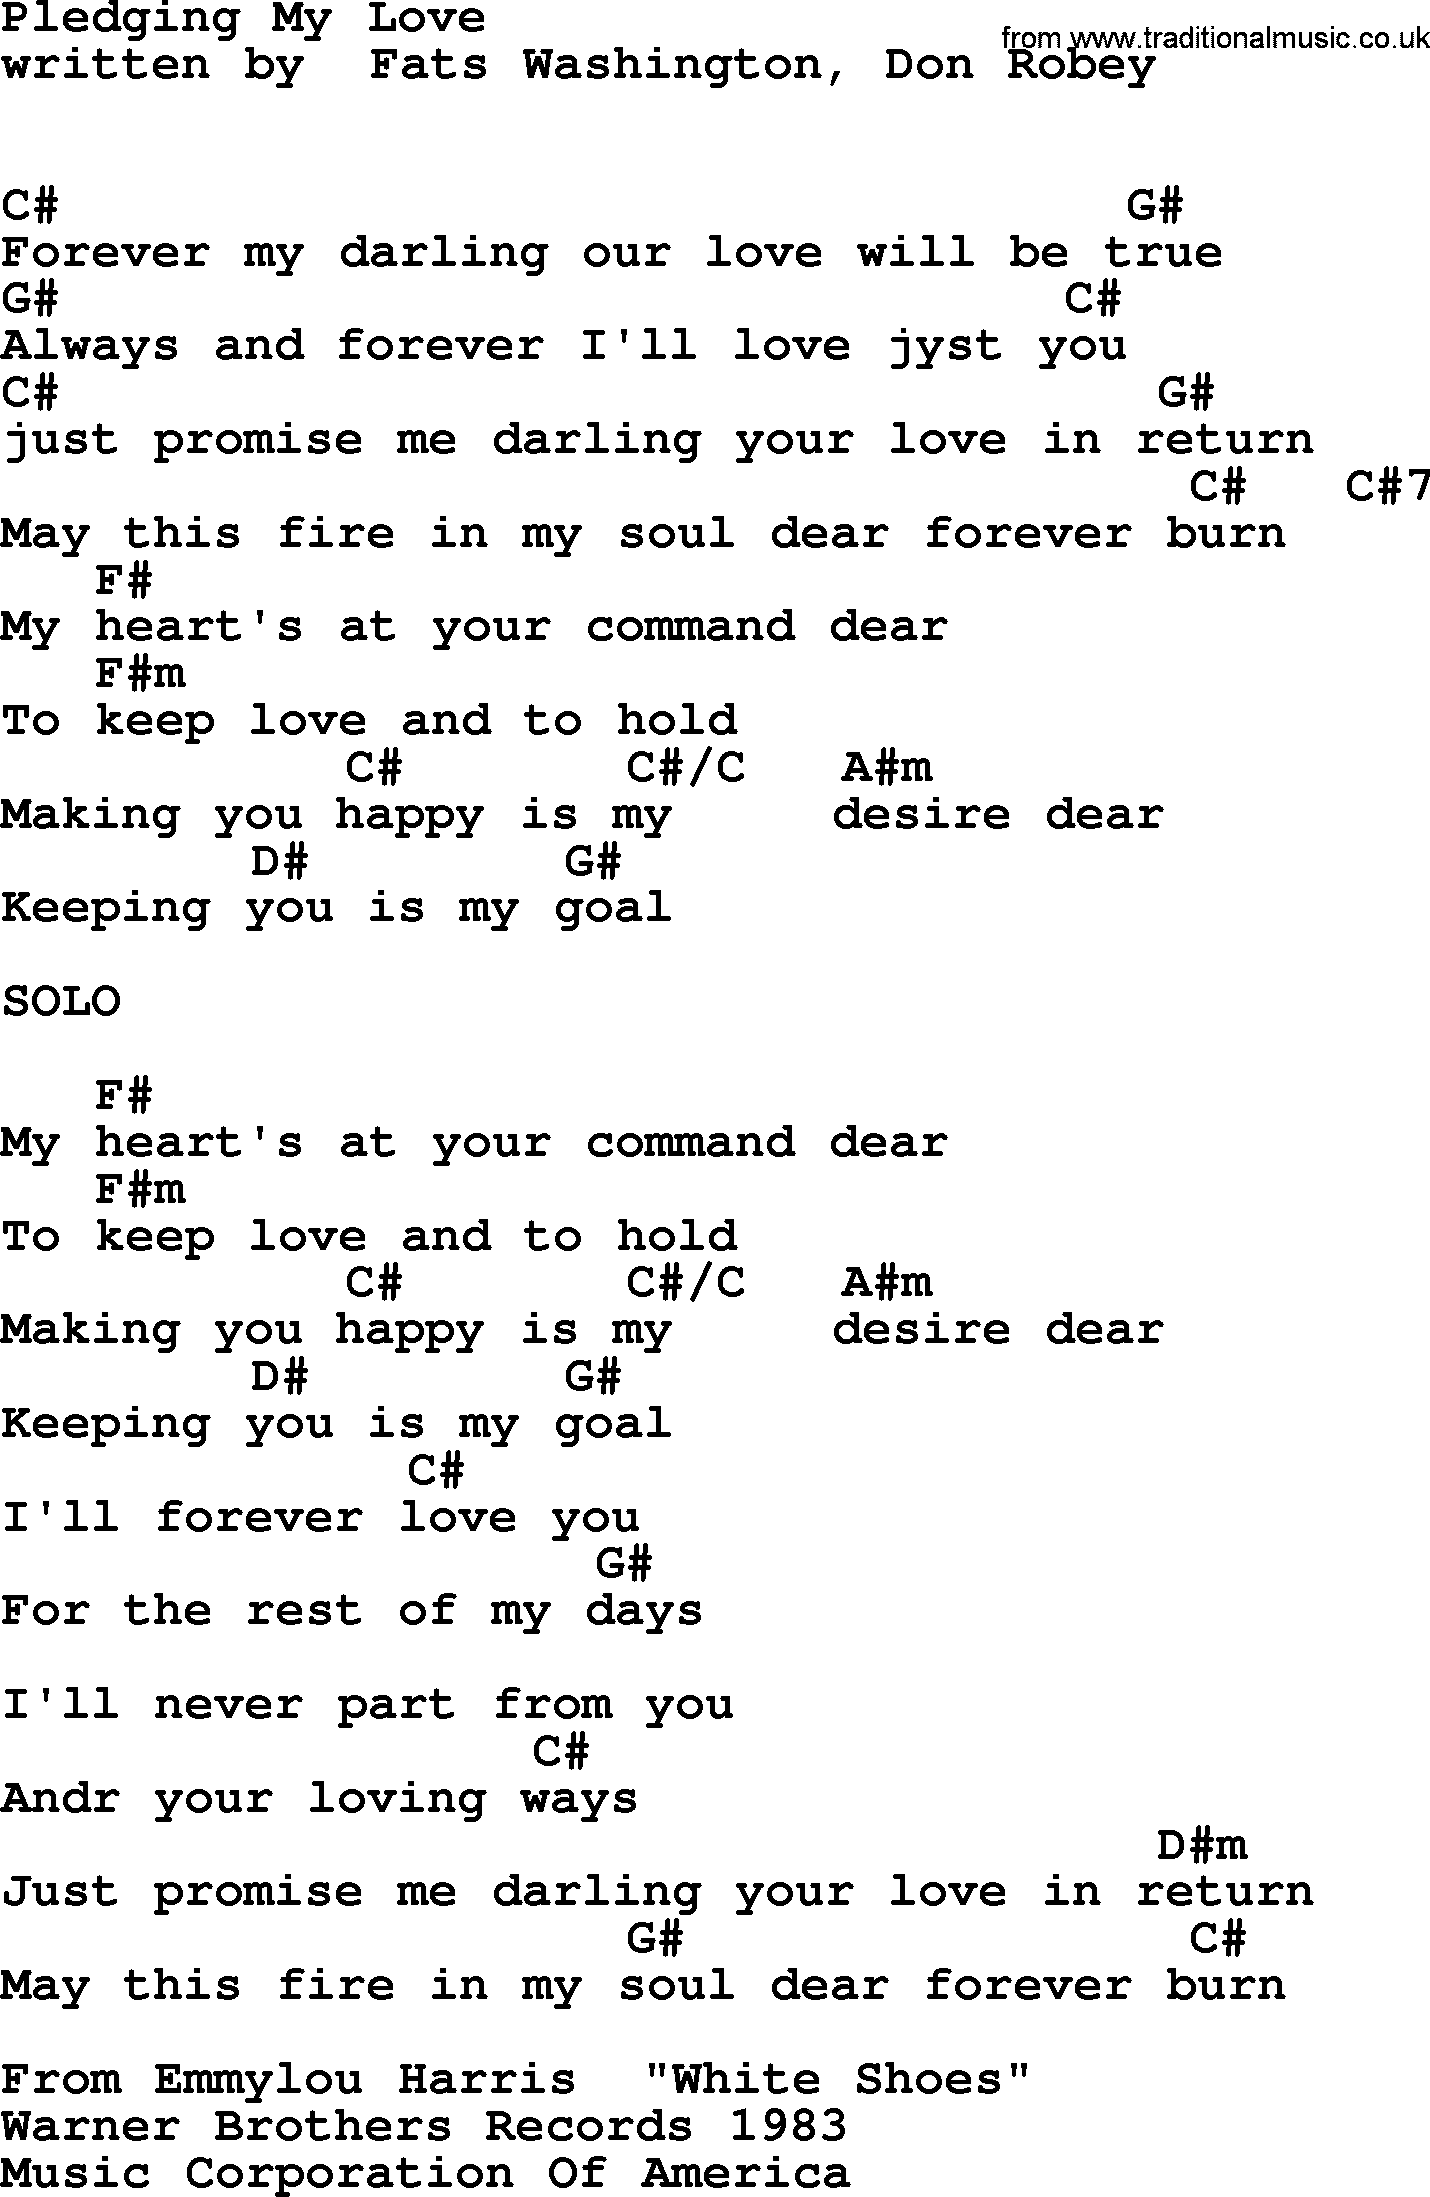 Emmylou Harris song: Pledging My Love lyrics and chords